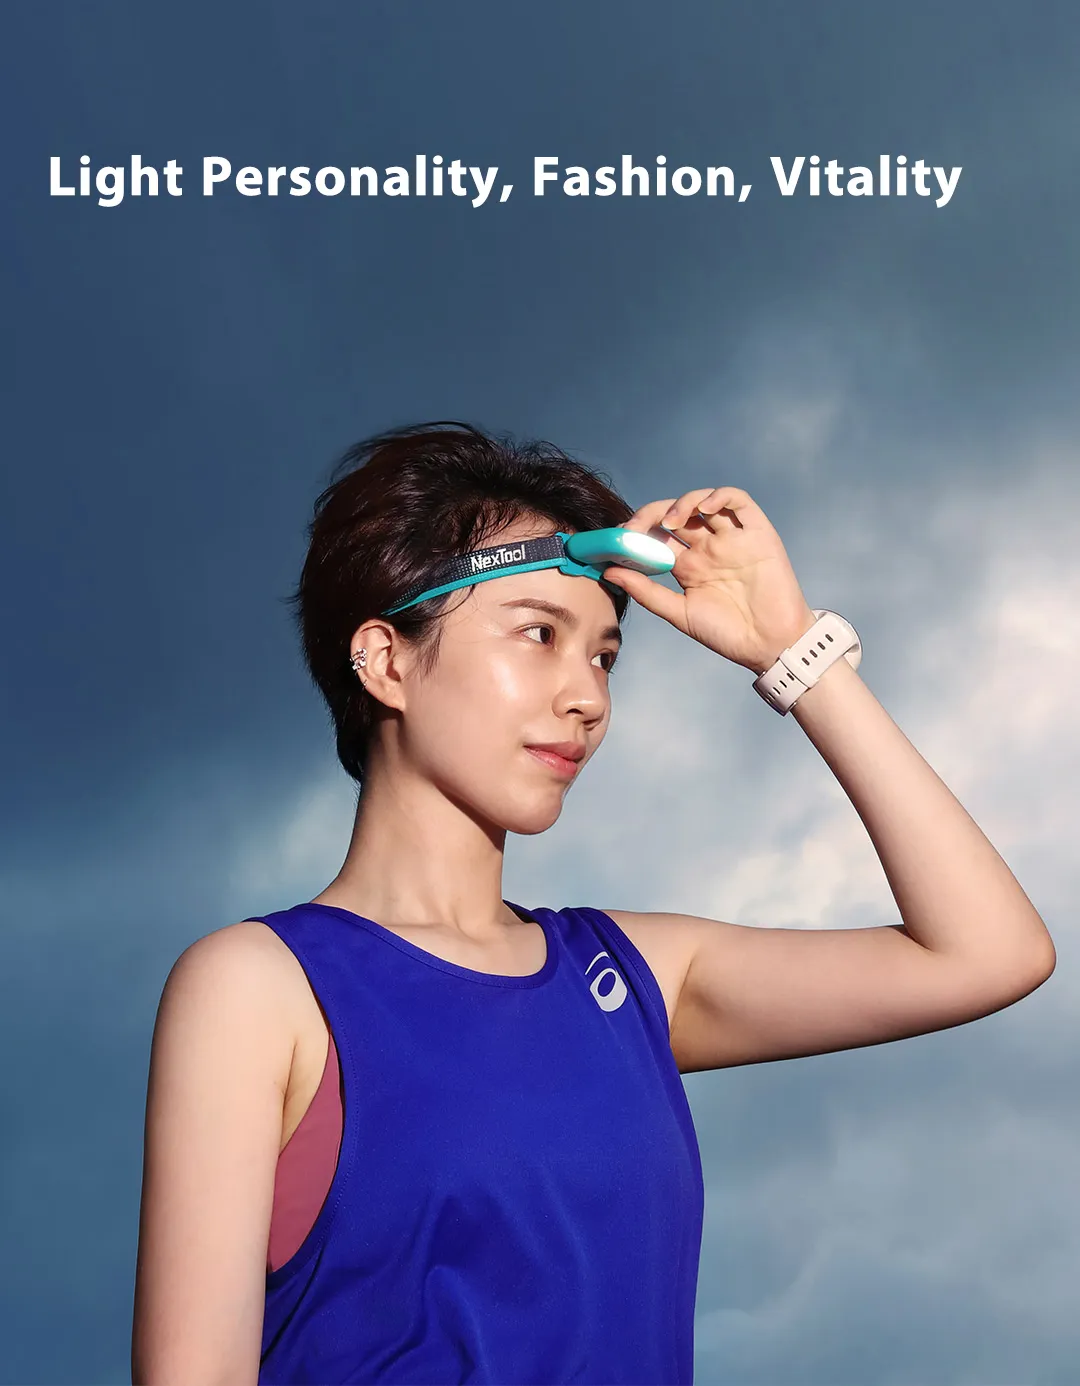 Nextool Headlamp LED Zoom Flashlight Rechargeable Waterproof 